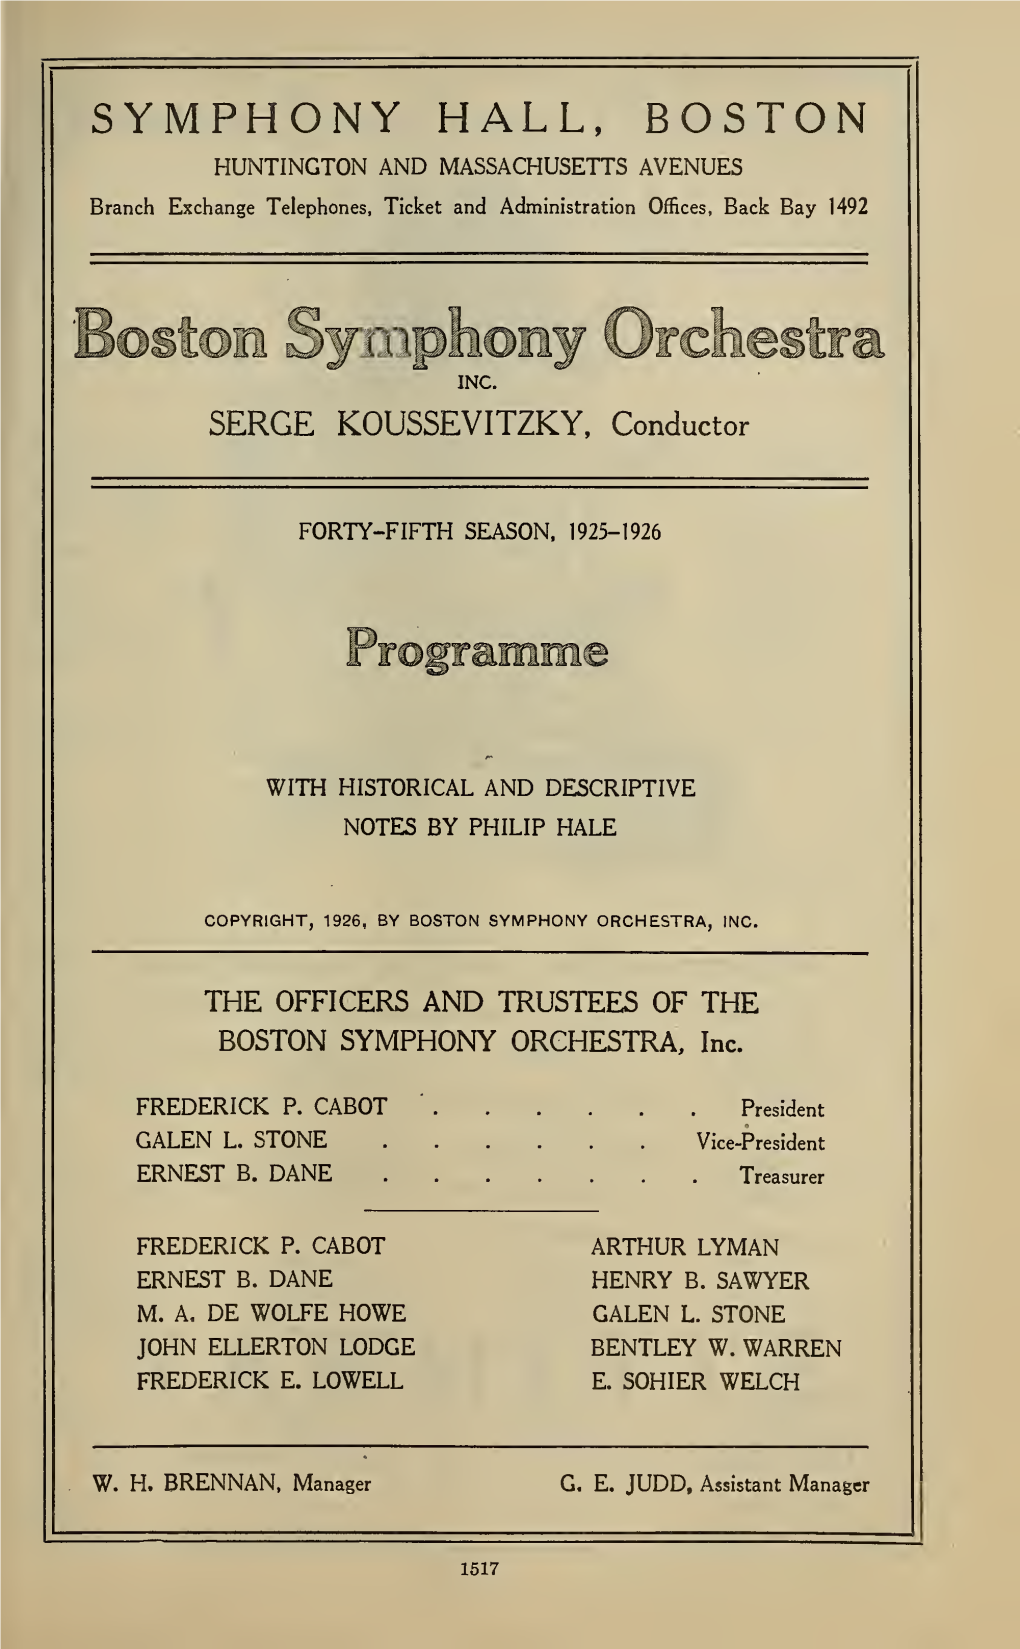 Boston Symphony Orchestra Concert Programs, Season 45,1925-1926